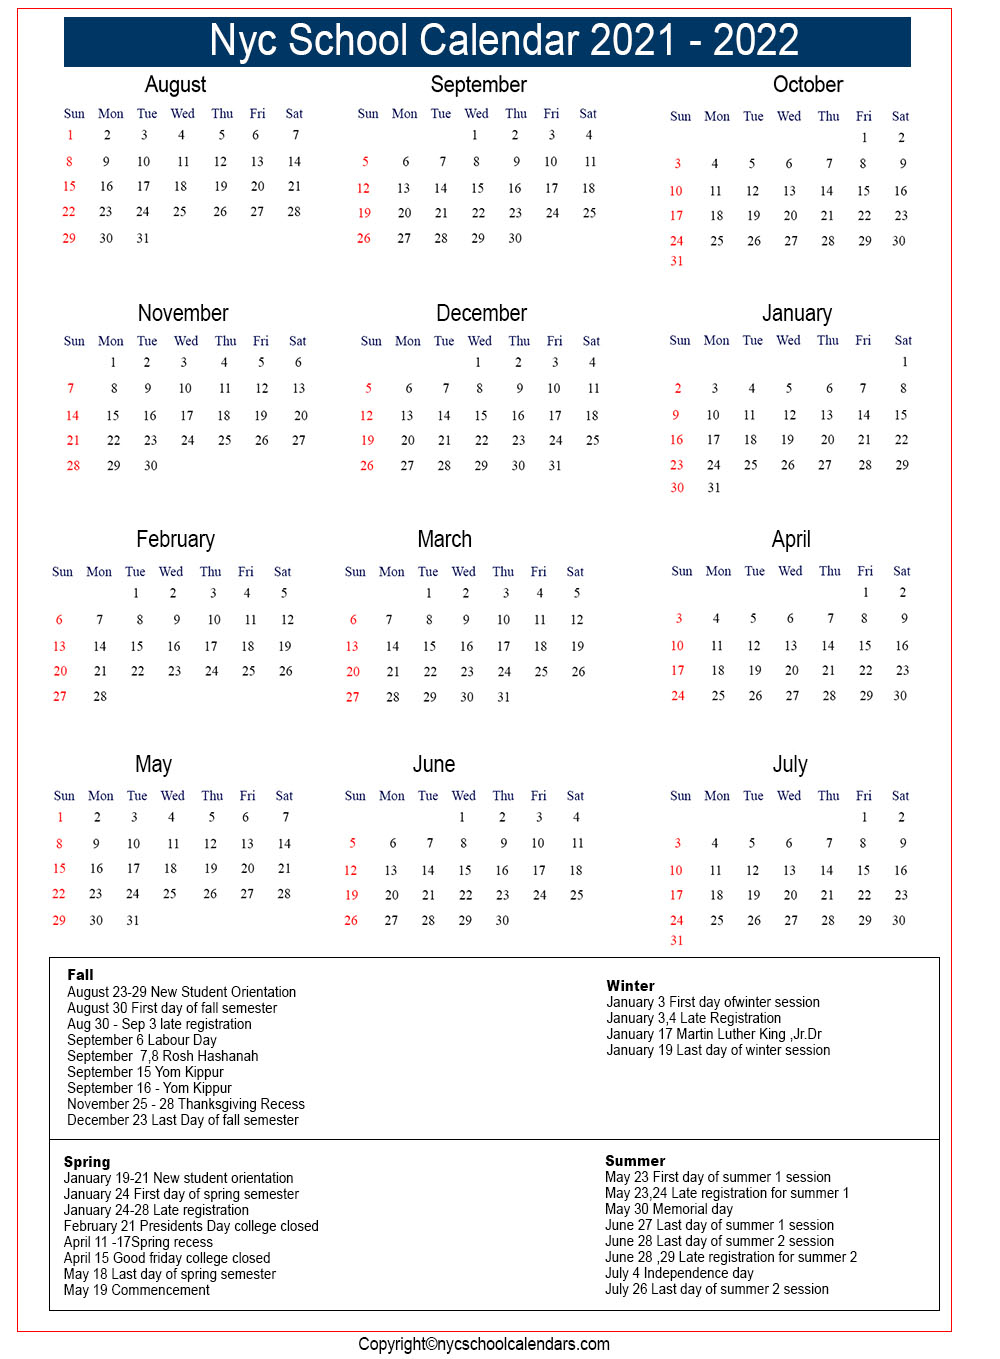 Rpi Academic Calendar 2021 2022 | 2021 Calendar